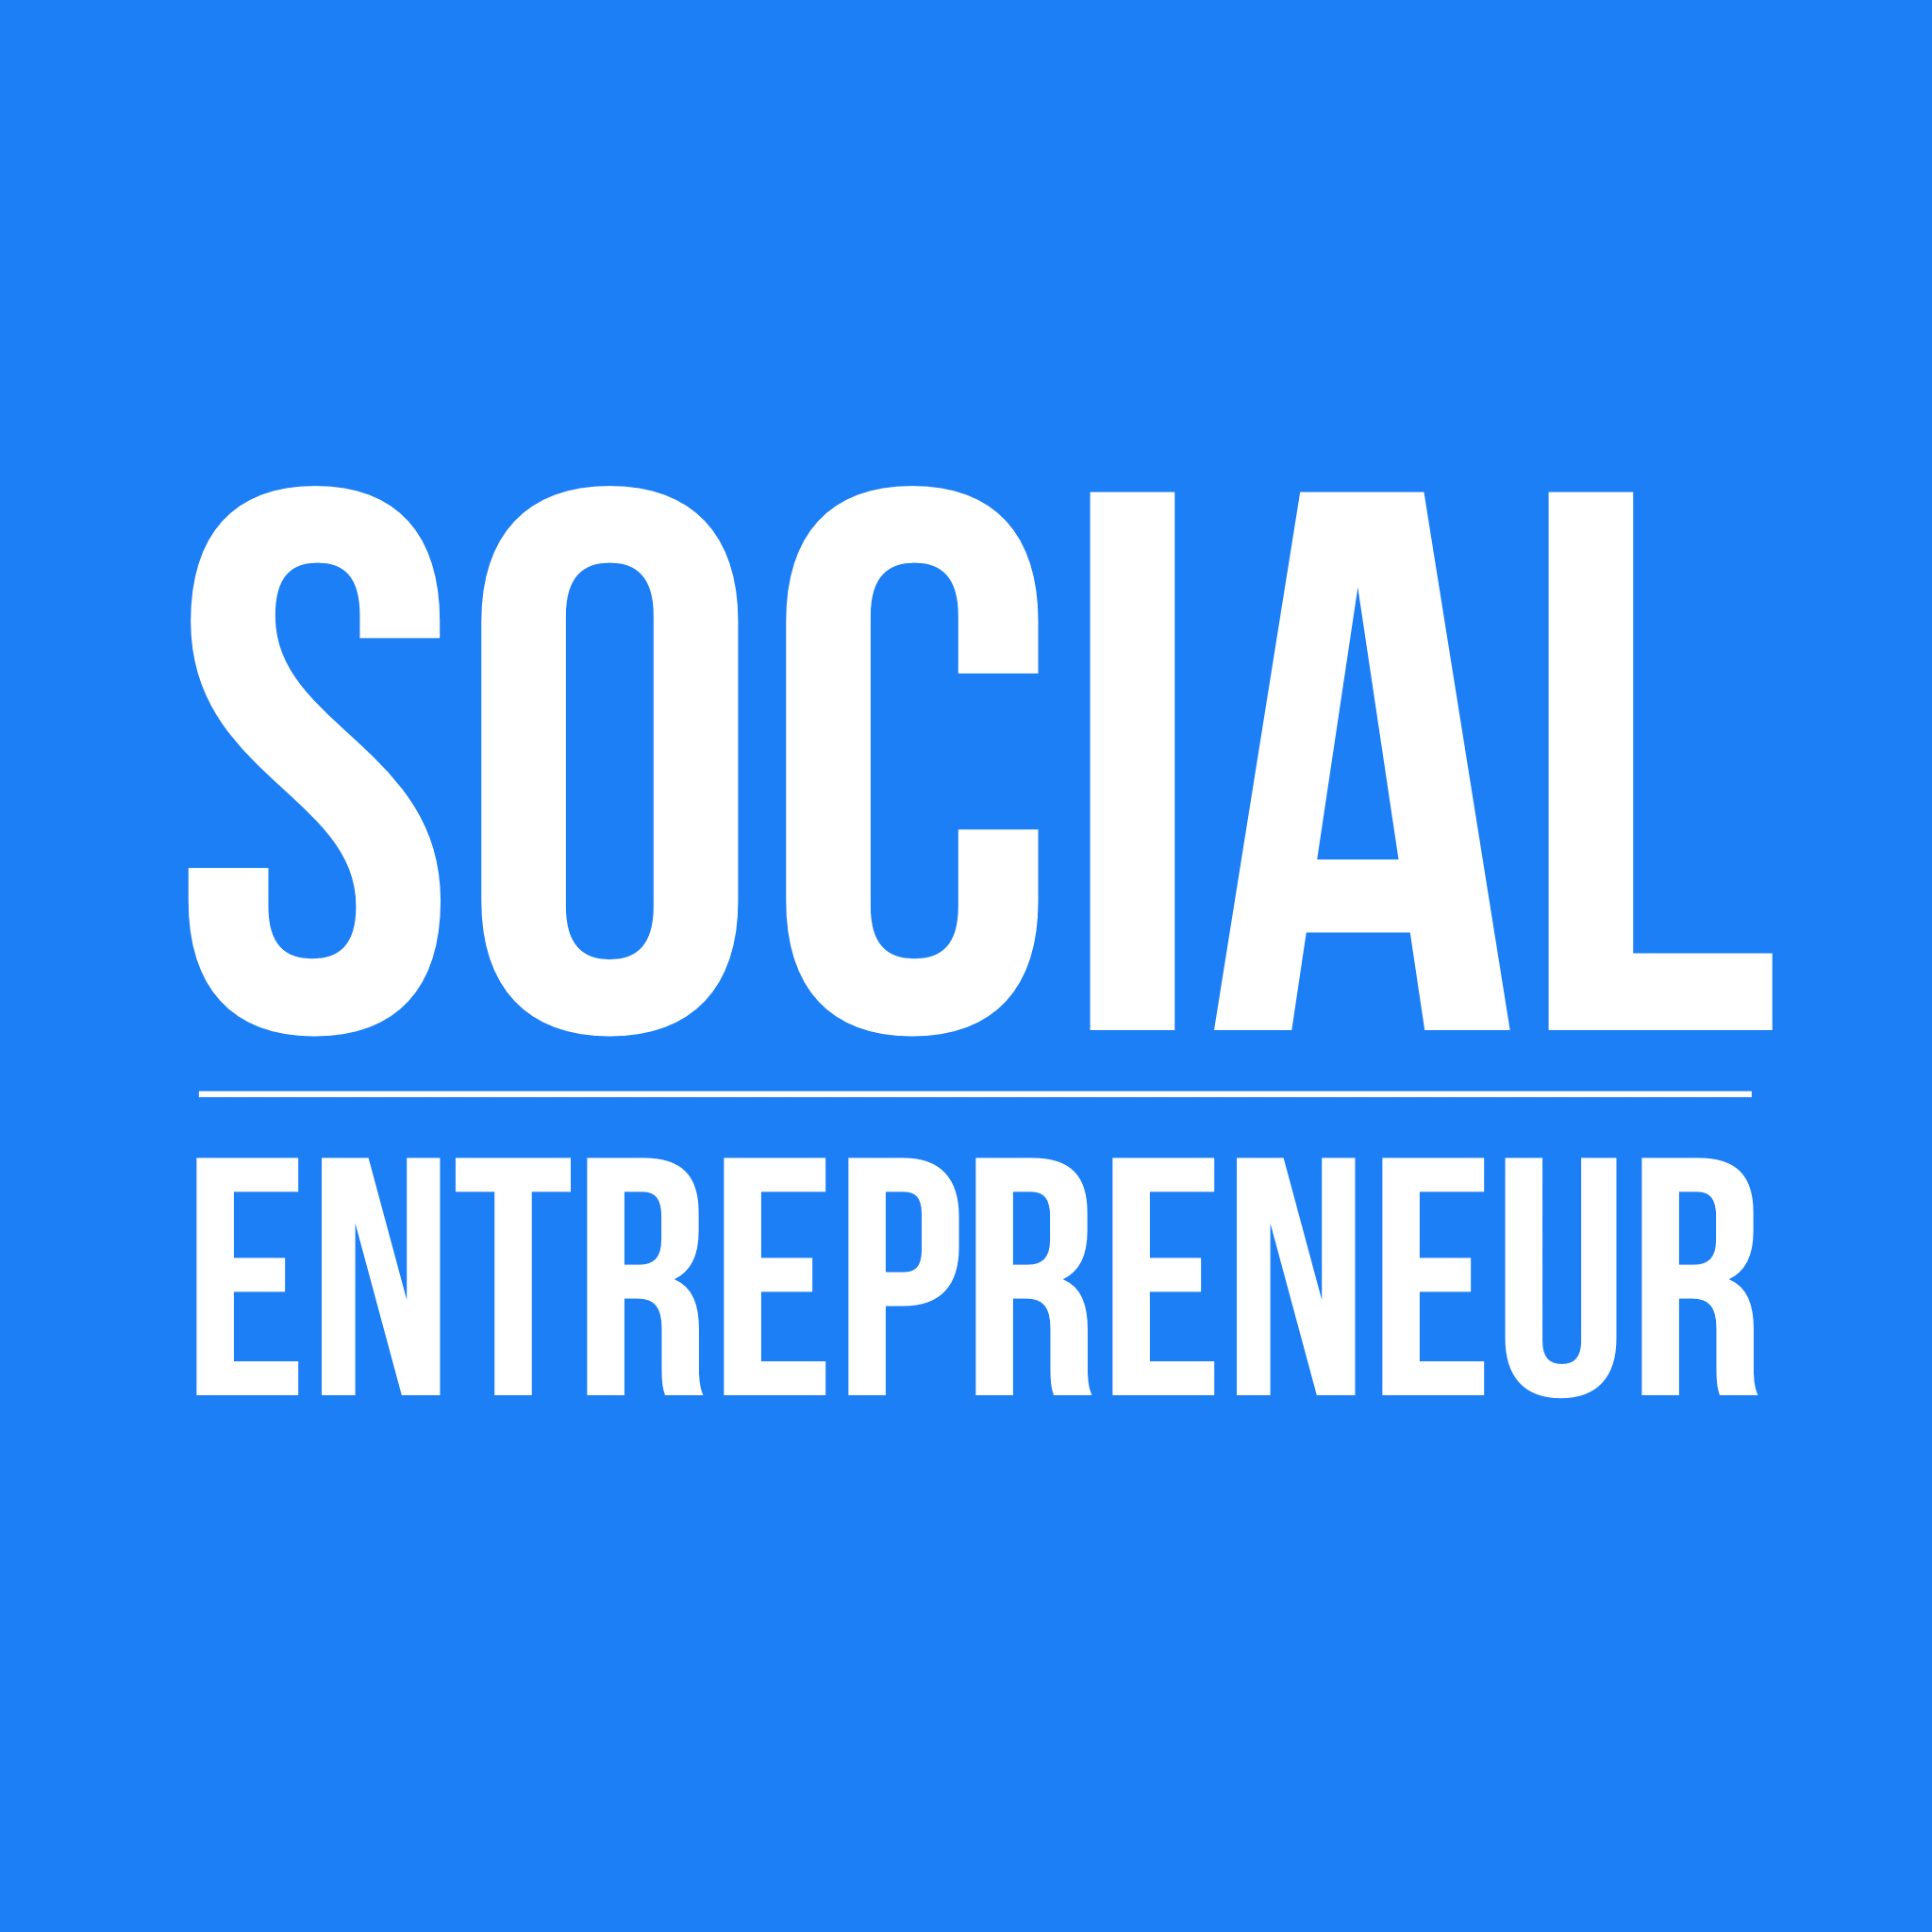 171, Mark Norbury, UnLtd | The Foundation for Social Entrepreneurs